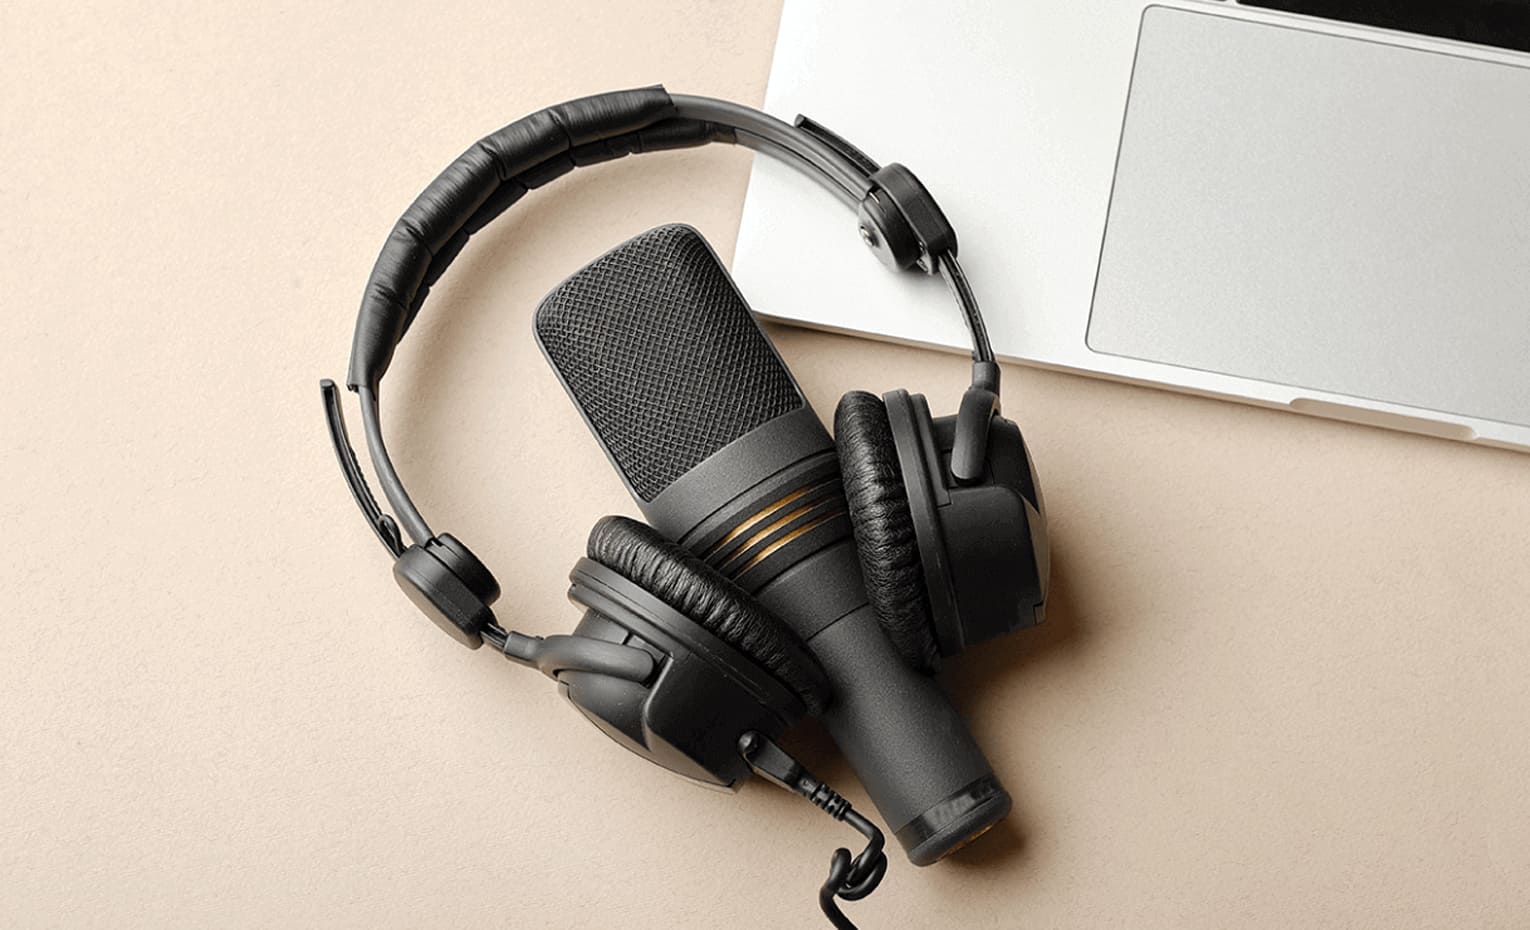 بهترین هدفون برای لایو استریم | The best headphones for live streaming